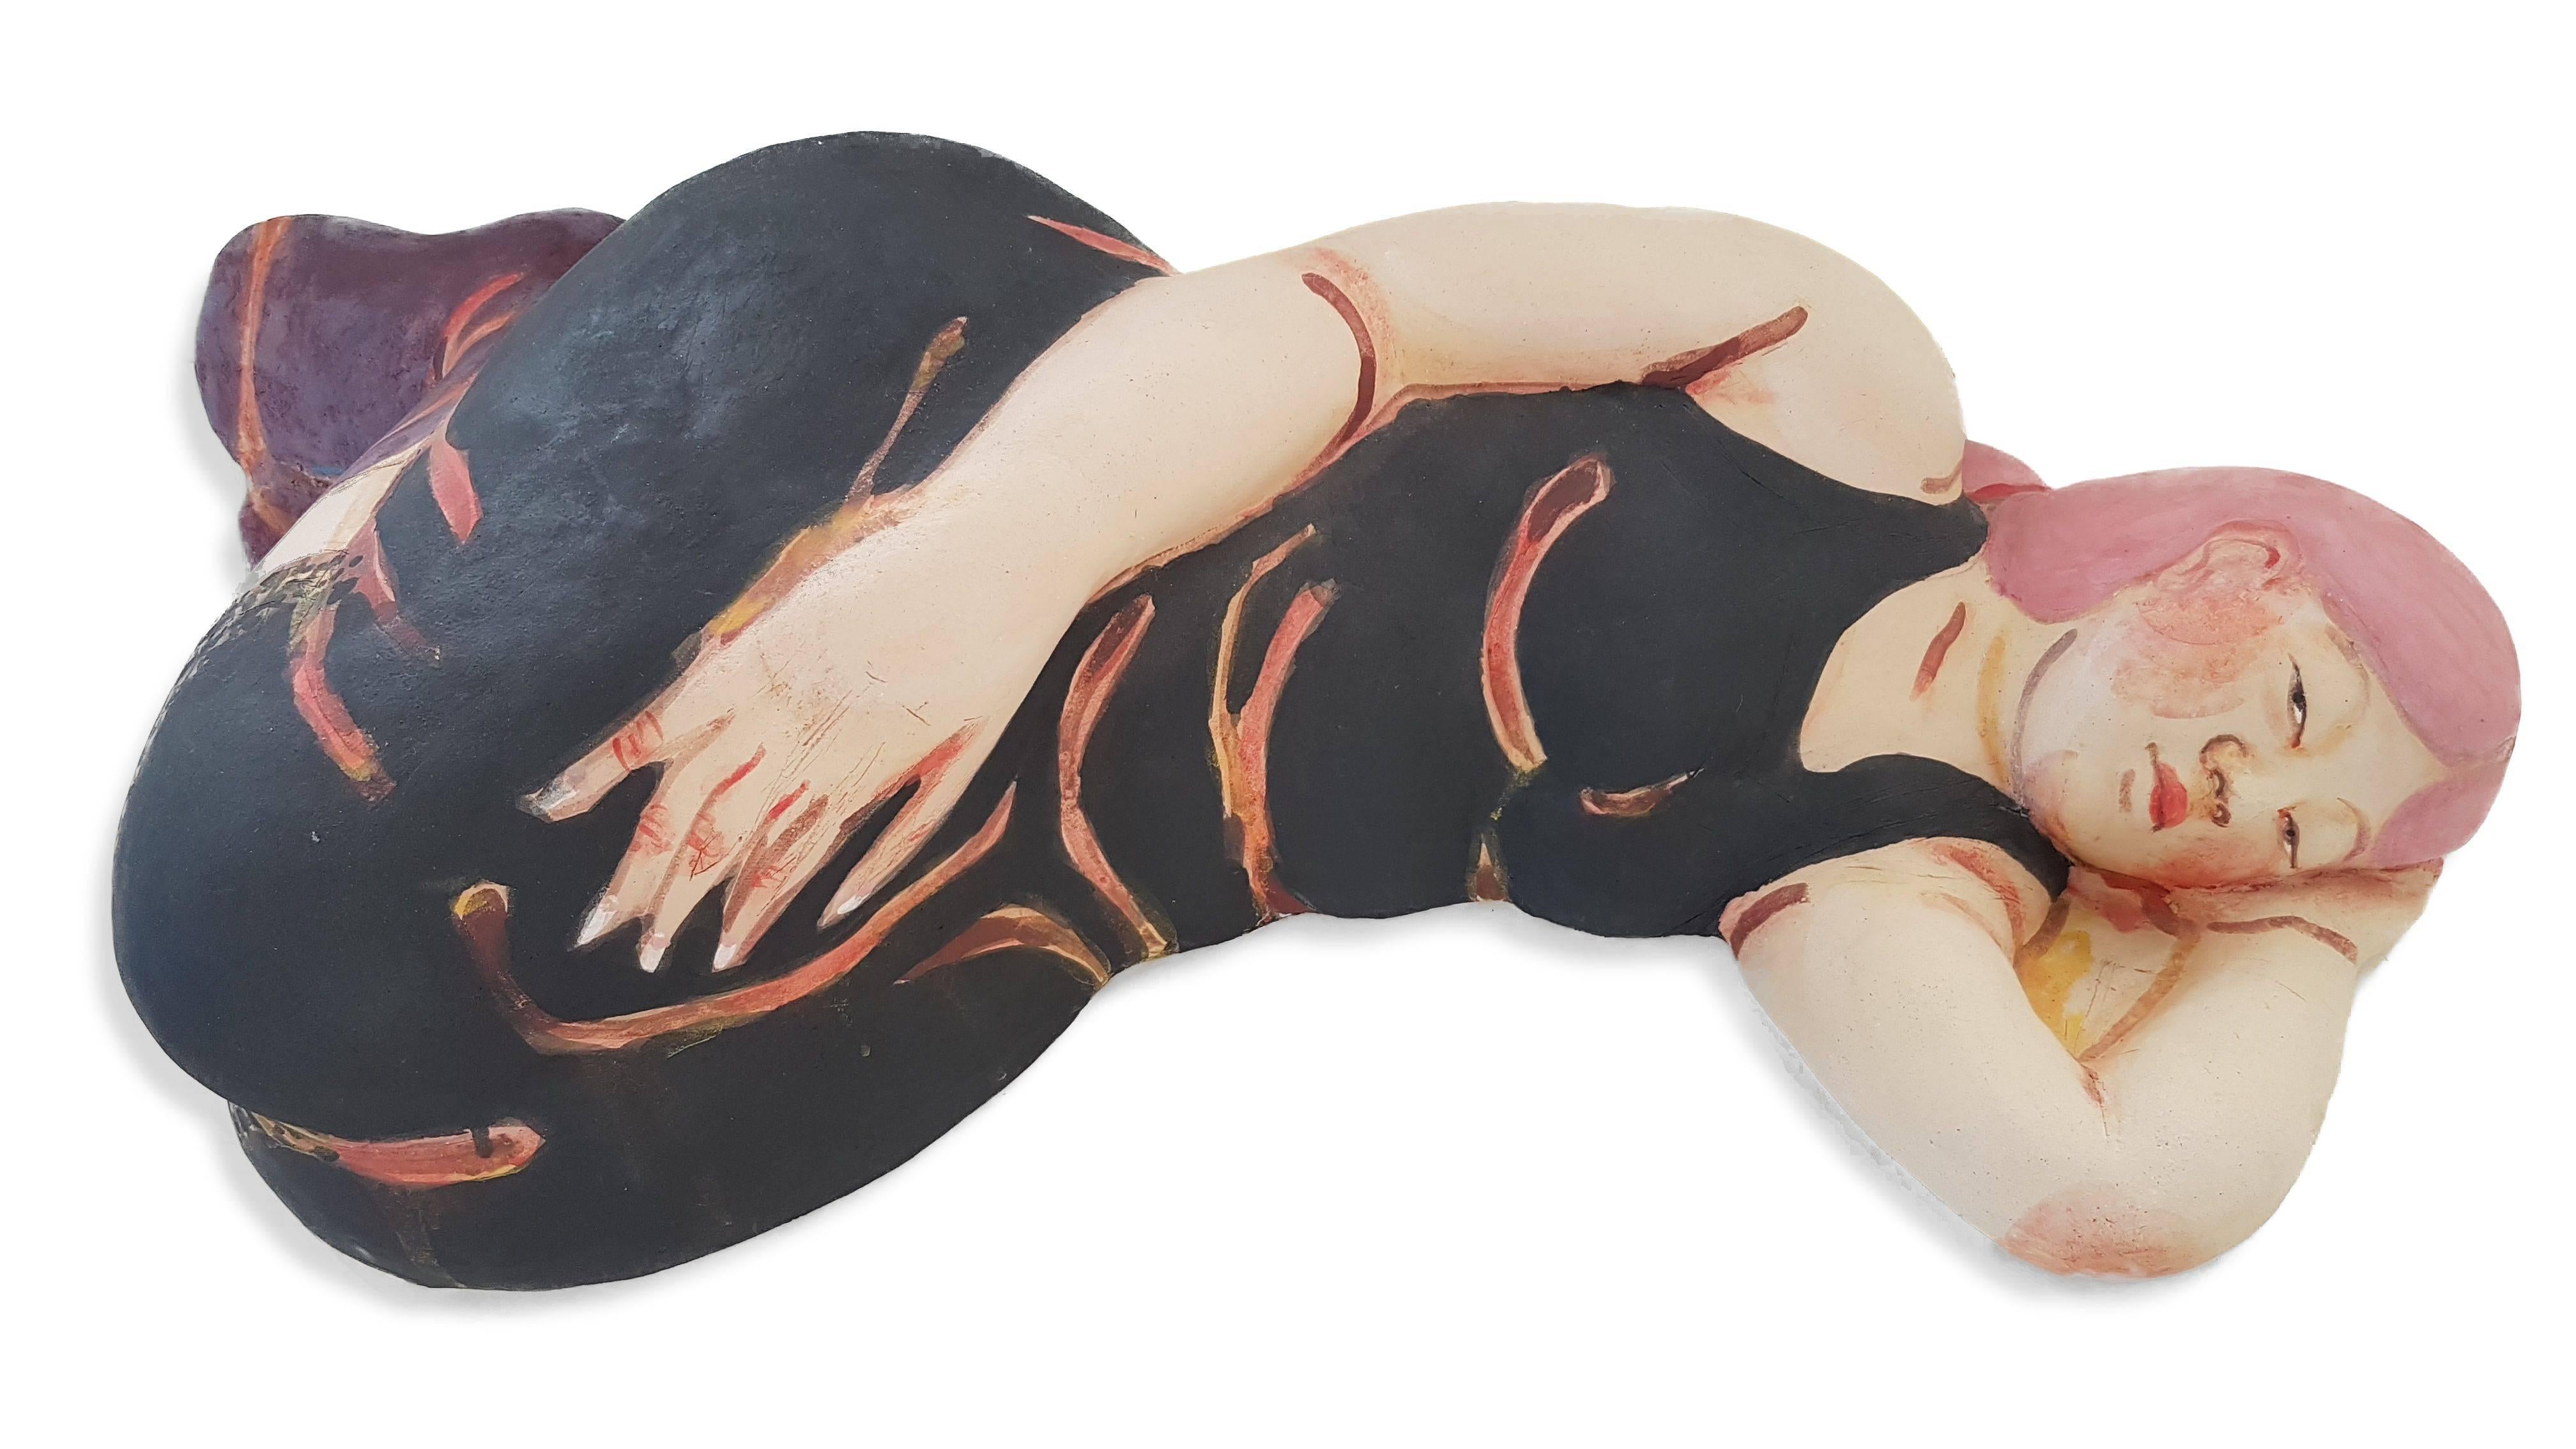 Akio Takamori Figurative Sculpture - Sleeping Woman in Black Dress with Red Hair